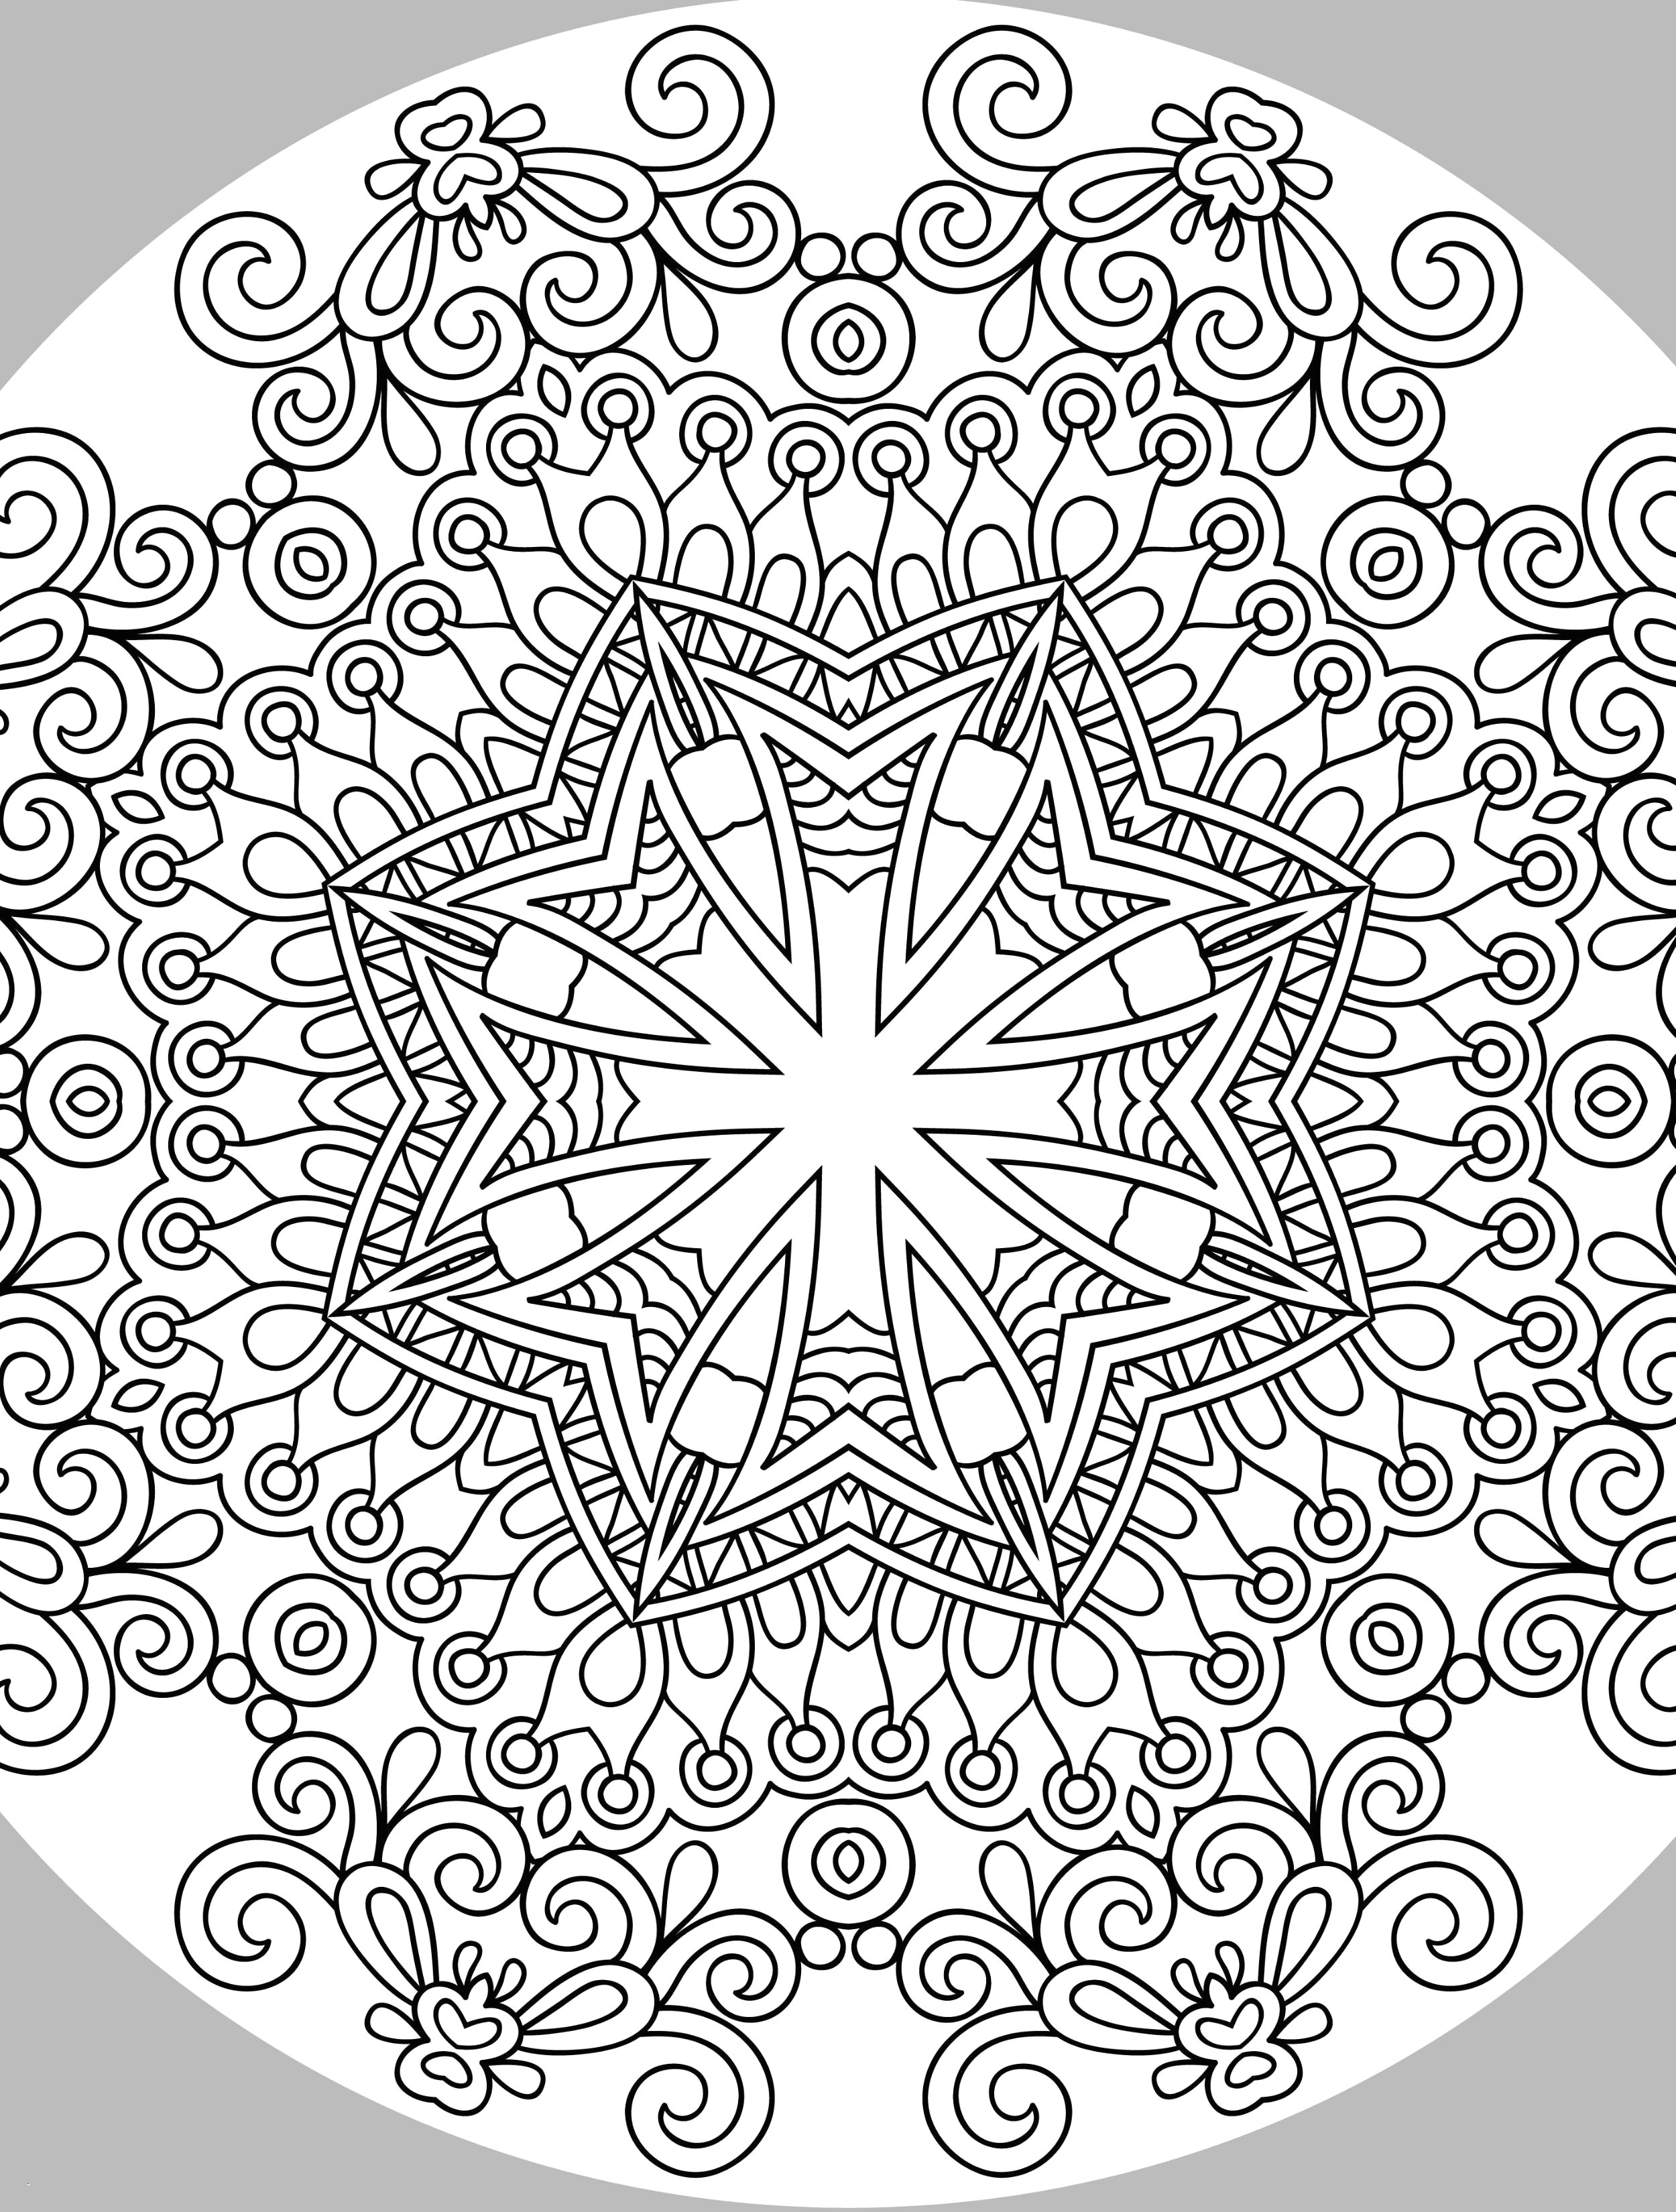 Drawing Mandala Flowers Best Of Easy Flower Mandala Coloring Pages Doiteasy Me